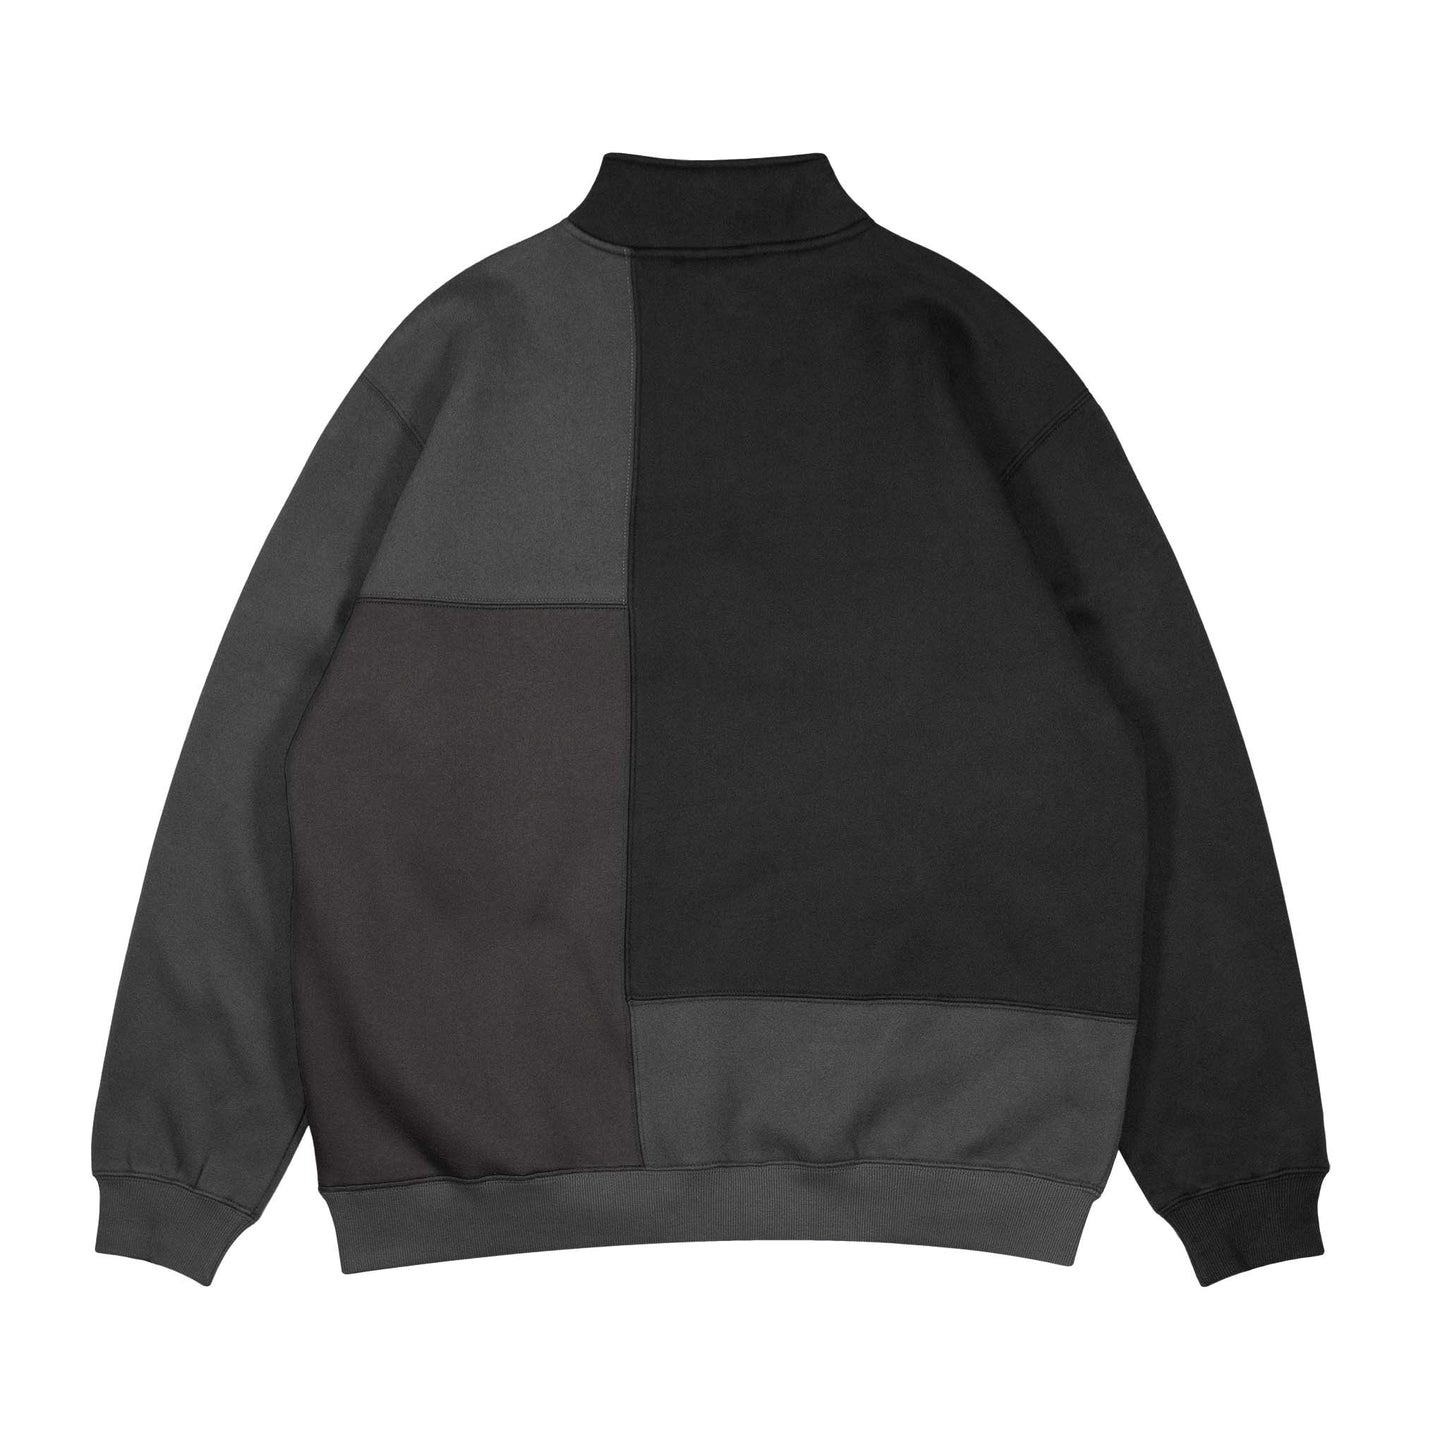 Paneled Quarterzip - Black|Gray|Charcoal